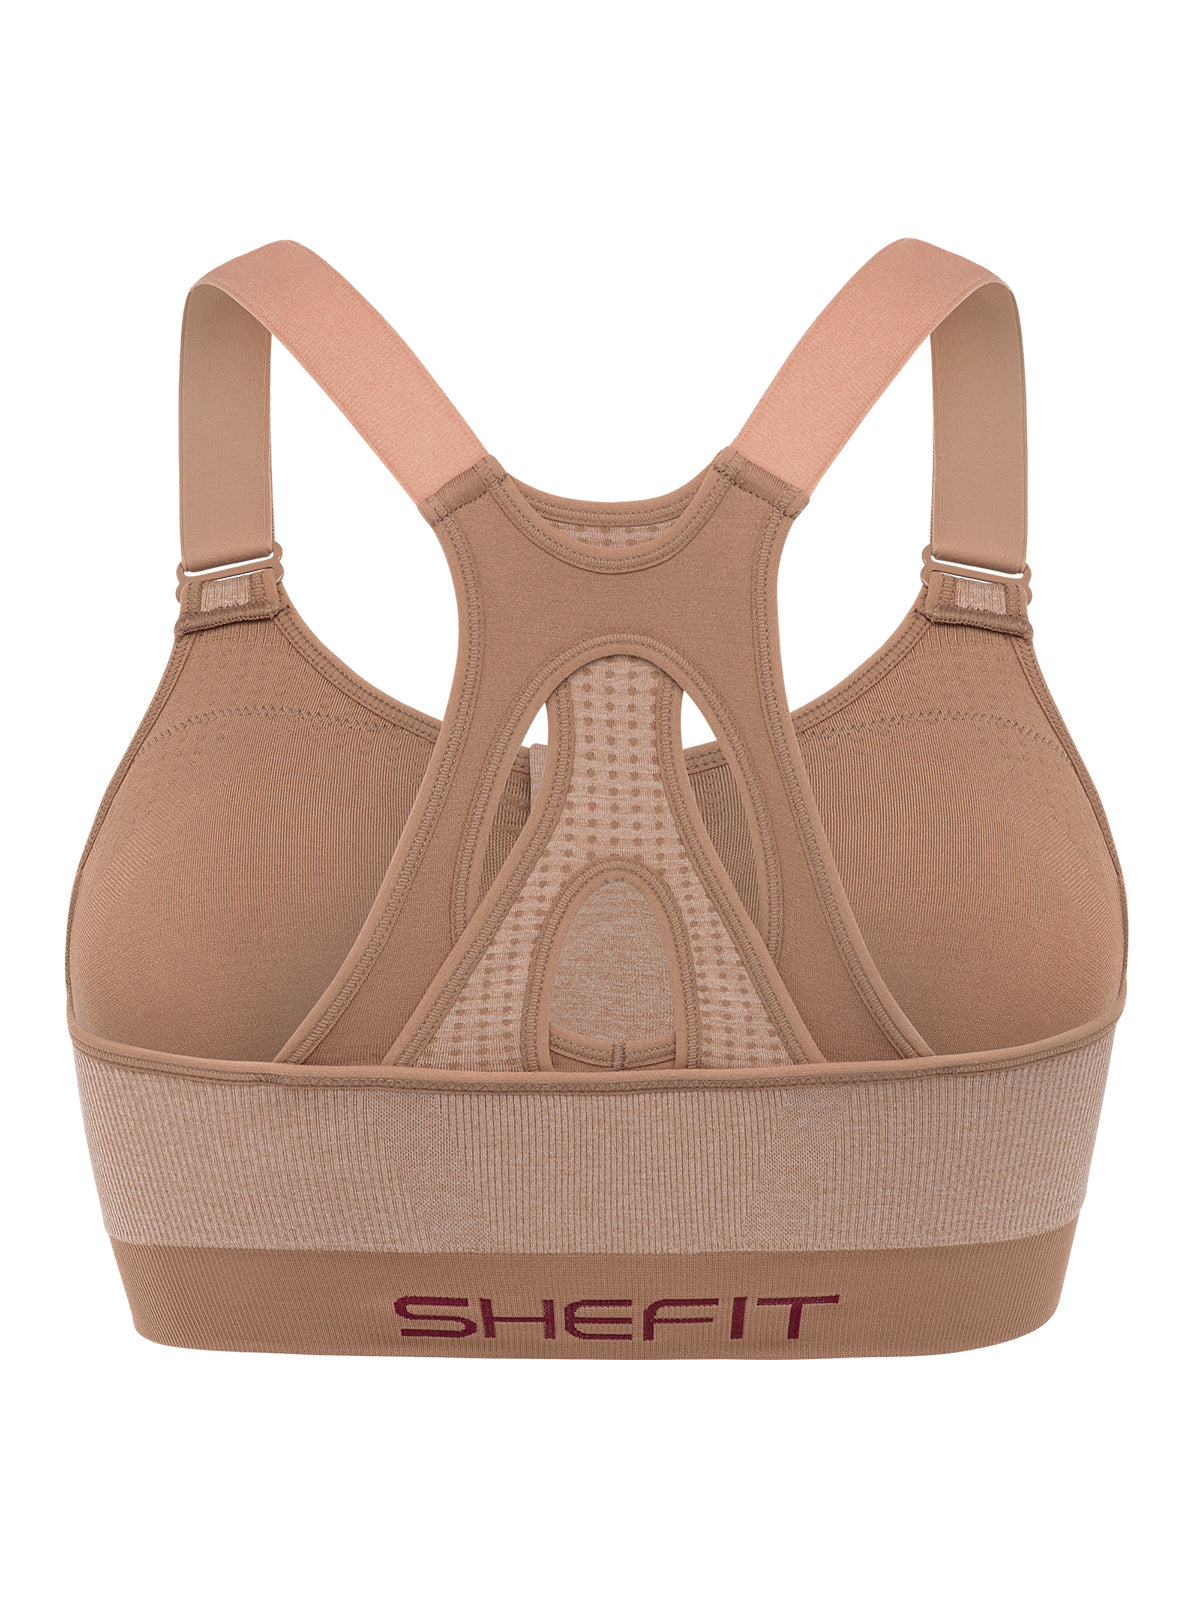 Buy SHEFIT Low Impact Sports Bra for Women, Heathered Indigo, 6X-Large at